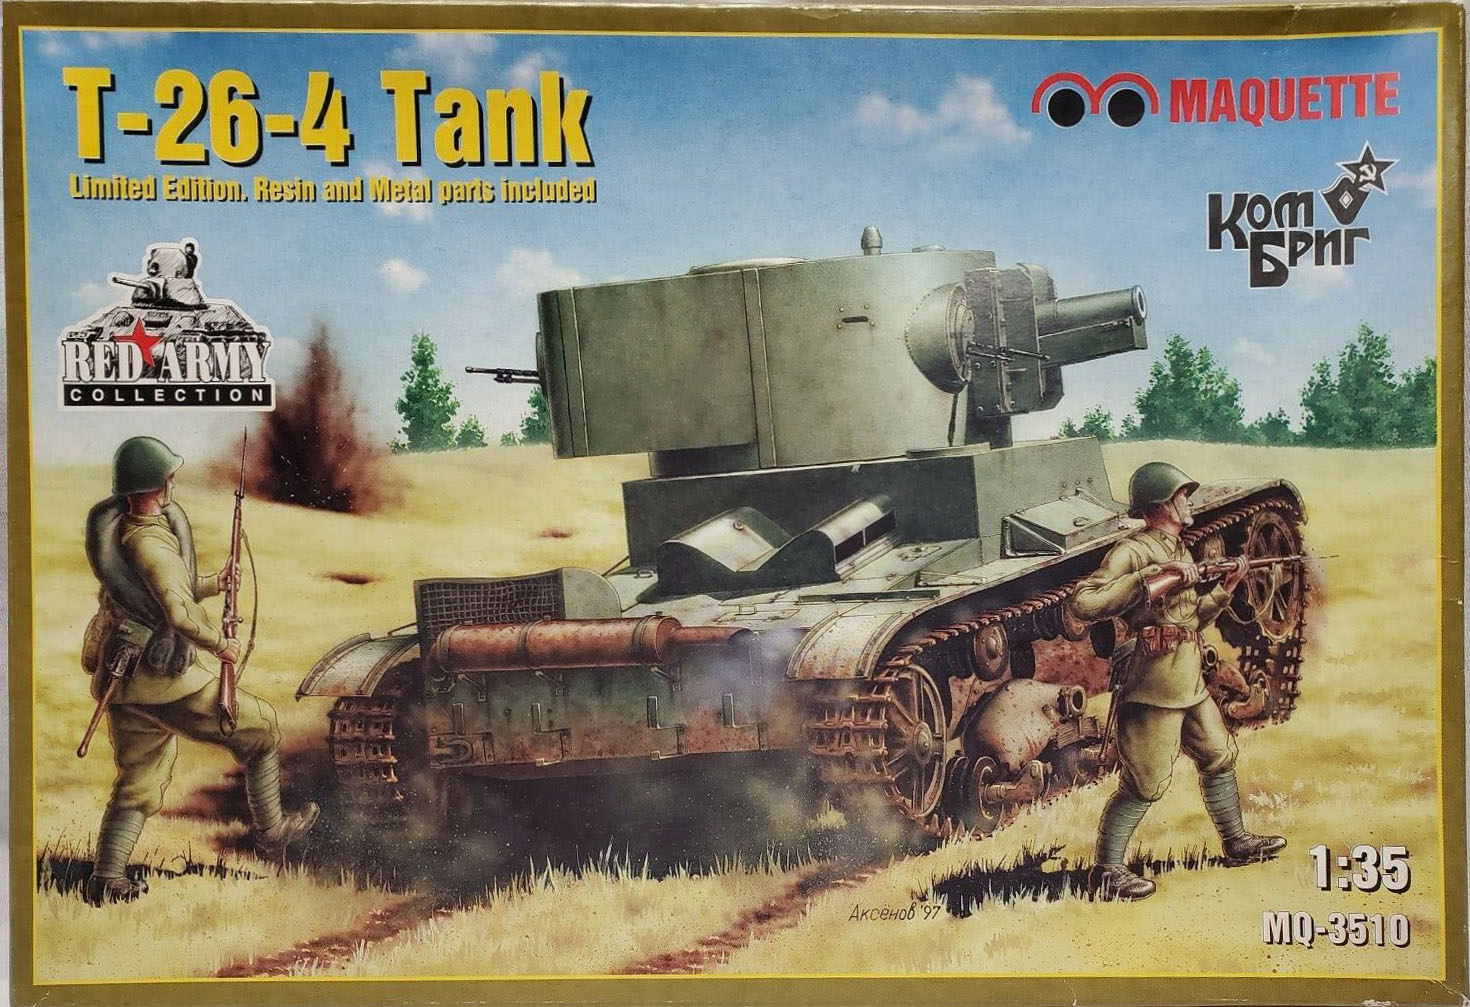 MQ-3510 T-26-4 Tank Image